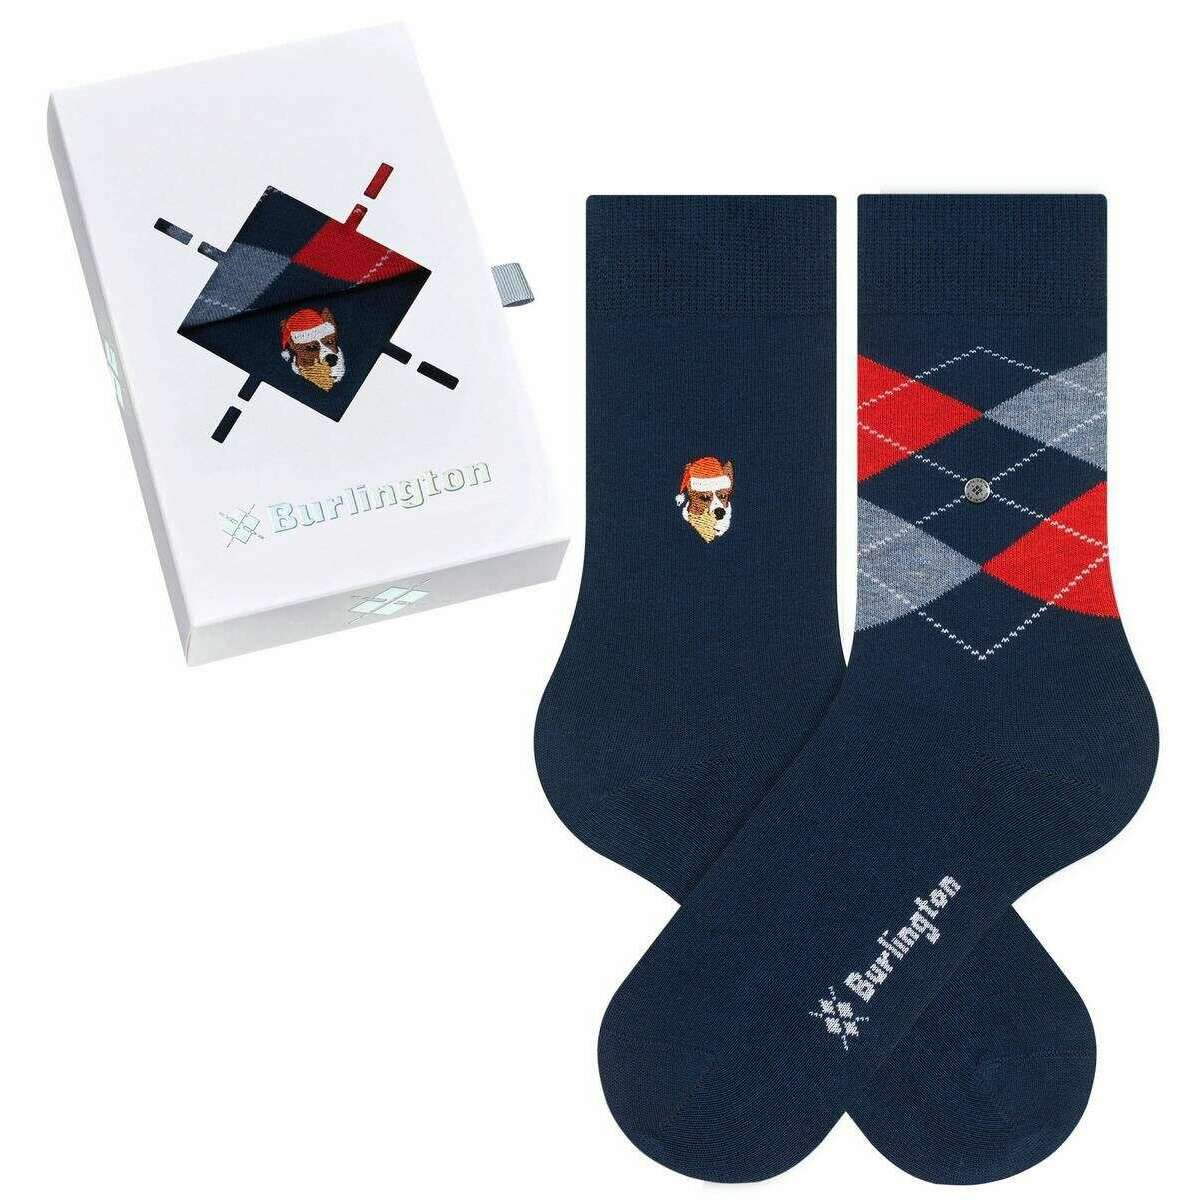 Burlington Everyday X-Mas 2 Pack Gift Box Socks - Navy Blue/Red